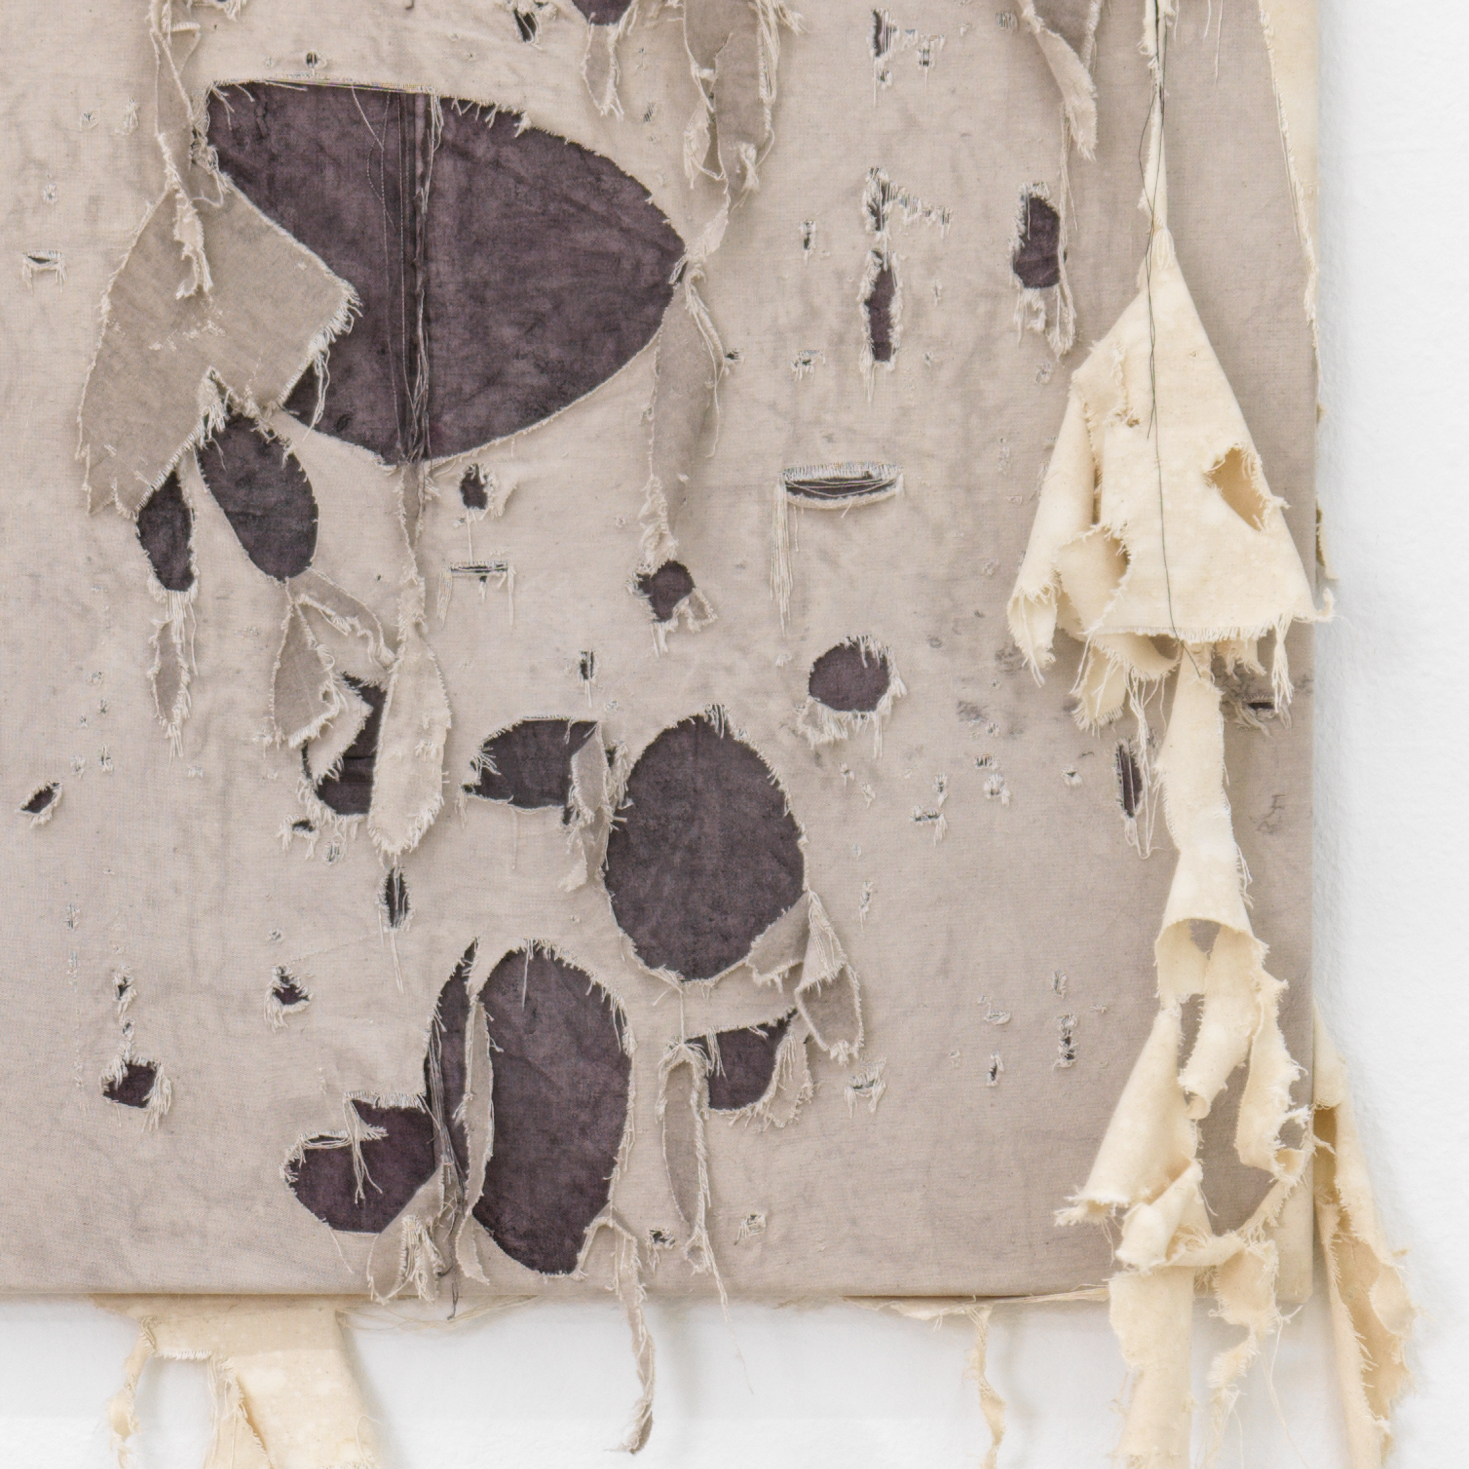 Javier Alvarez Sagredo, "Untitled (LÃ¡grimas)", 2022. Chlorine and pigments on sewn cotton canvas, 60.0 x 80.0 cm